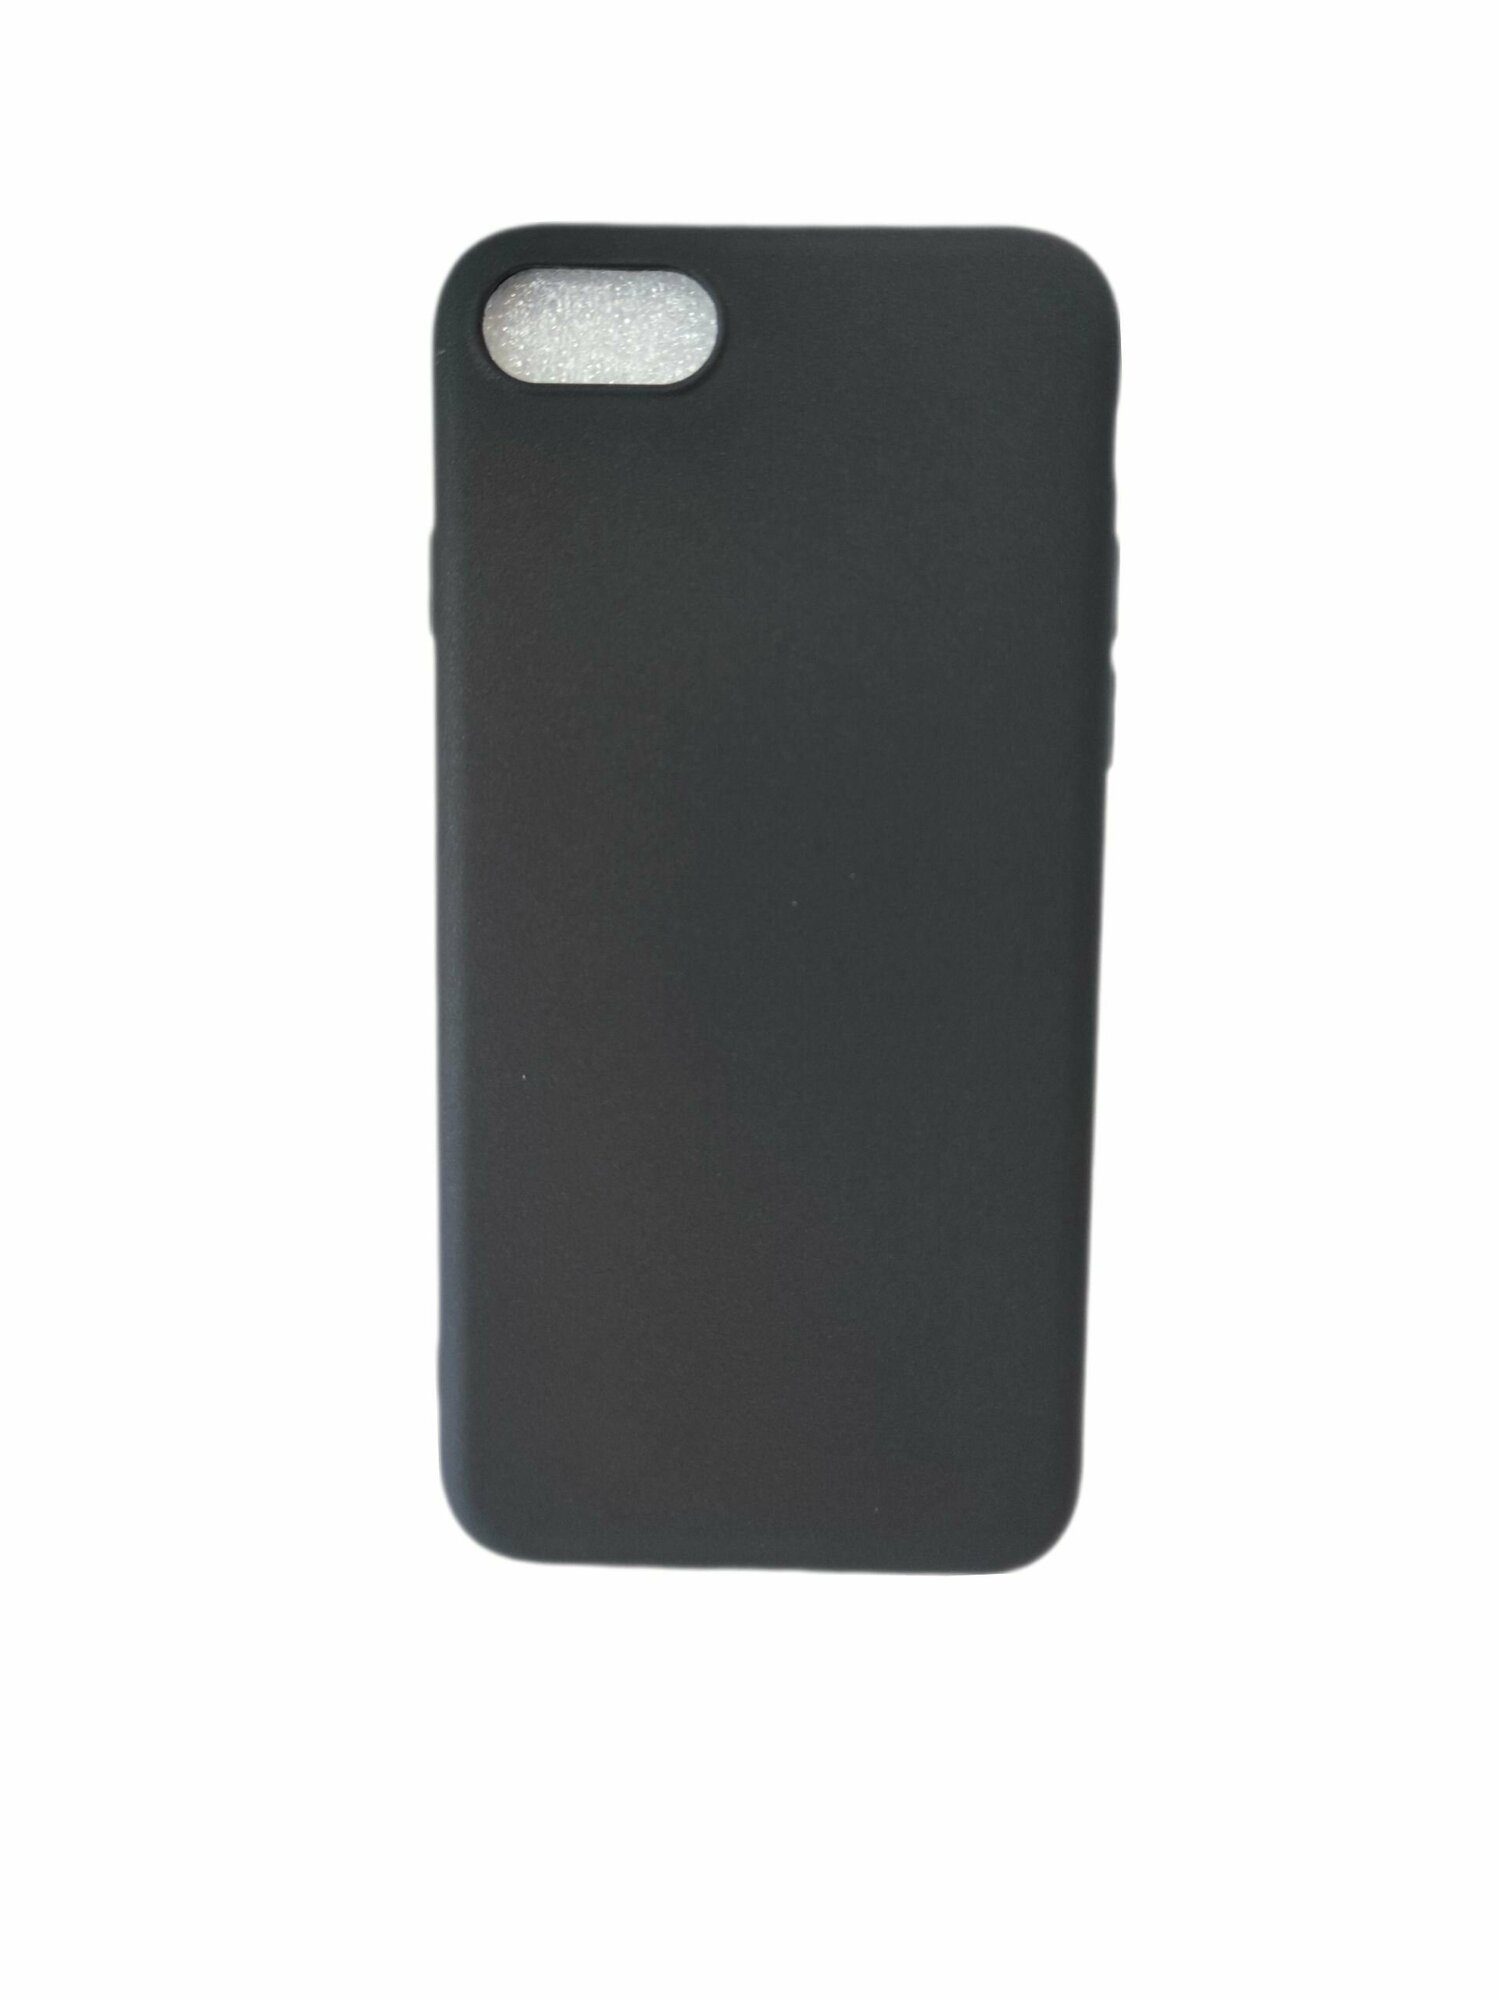 IPhone 7 / 8 / SE 2020 силиконовый чёрный чехол, эпл айфон се 2020 бампер накладка